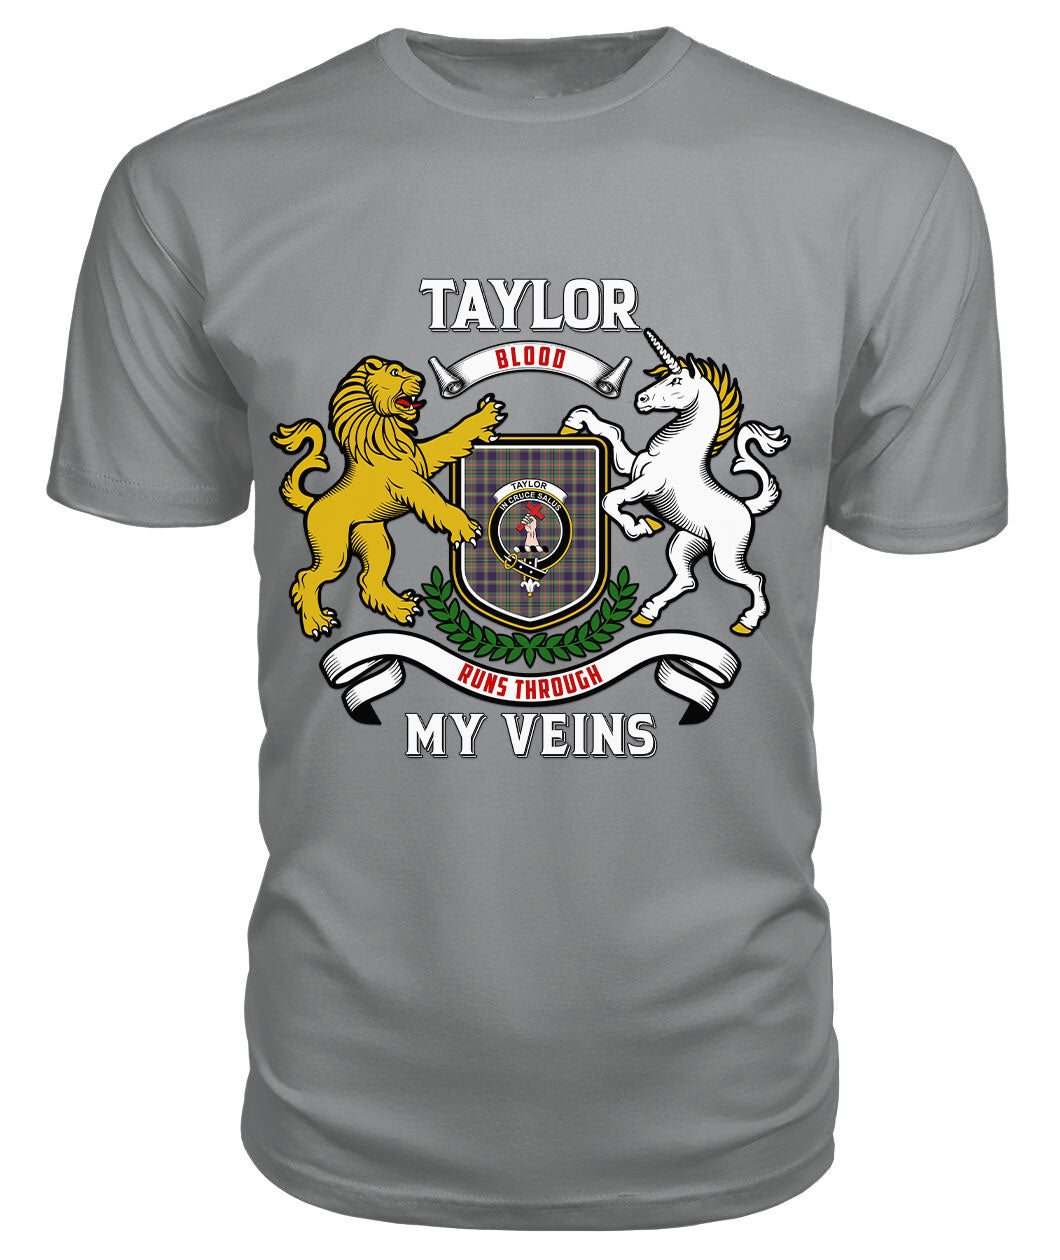 Taylor Weathered Tartan Crest 2D T-shirt - Blood Runs Through My Veins Style